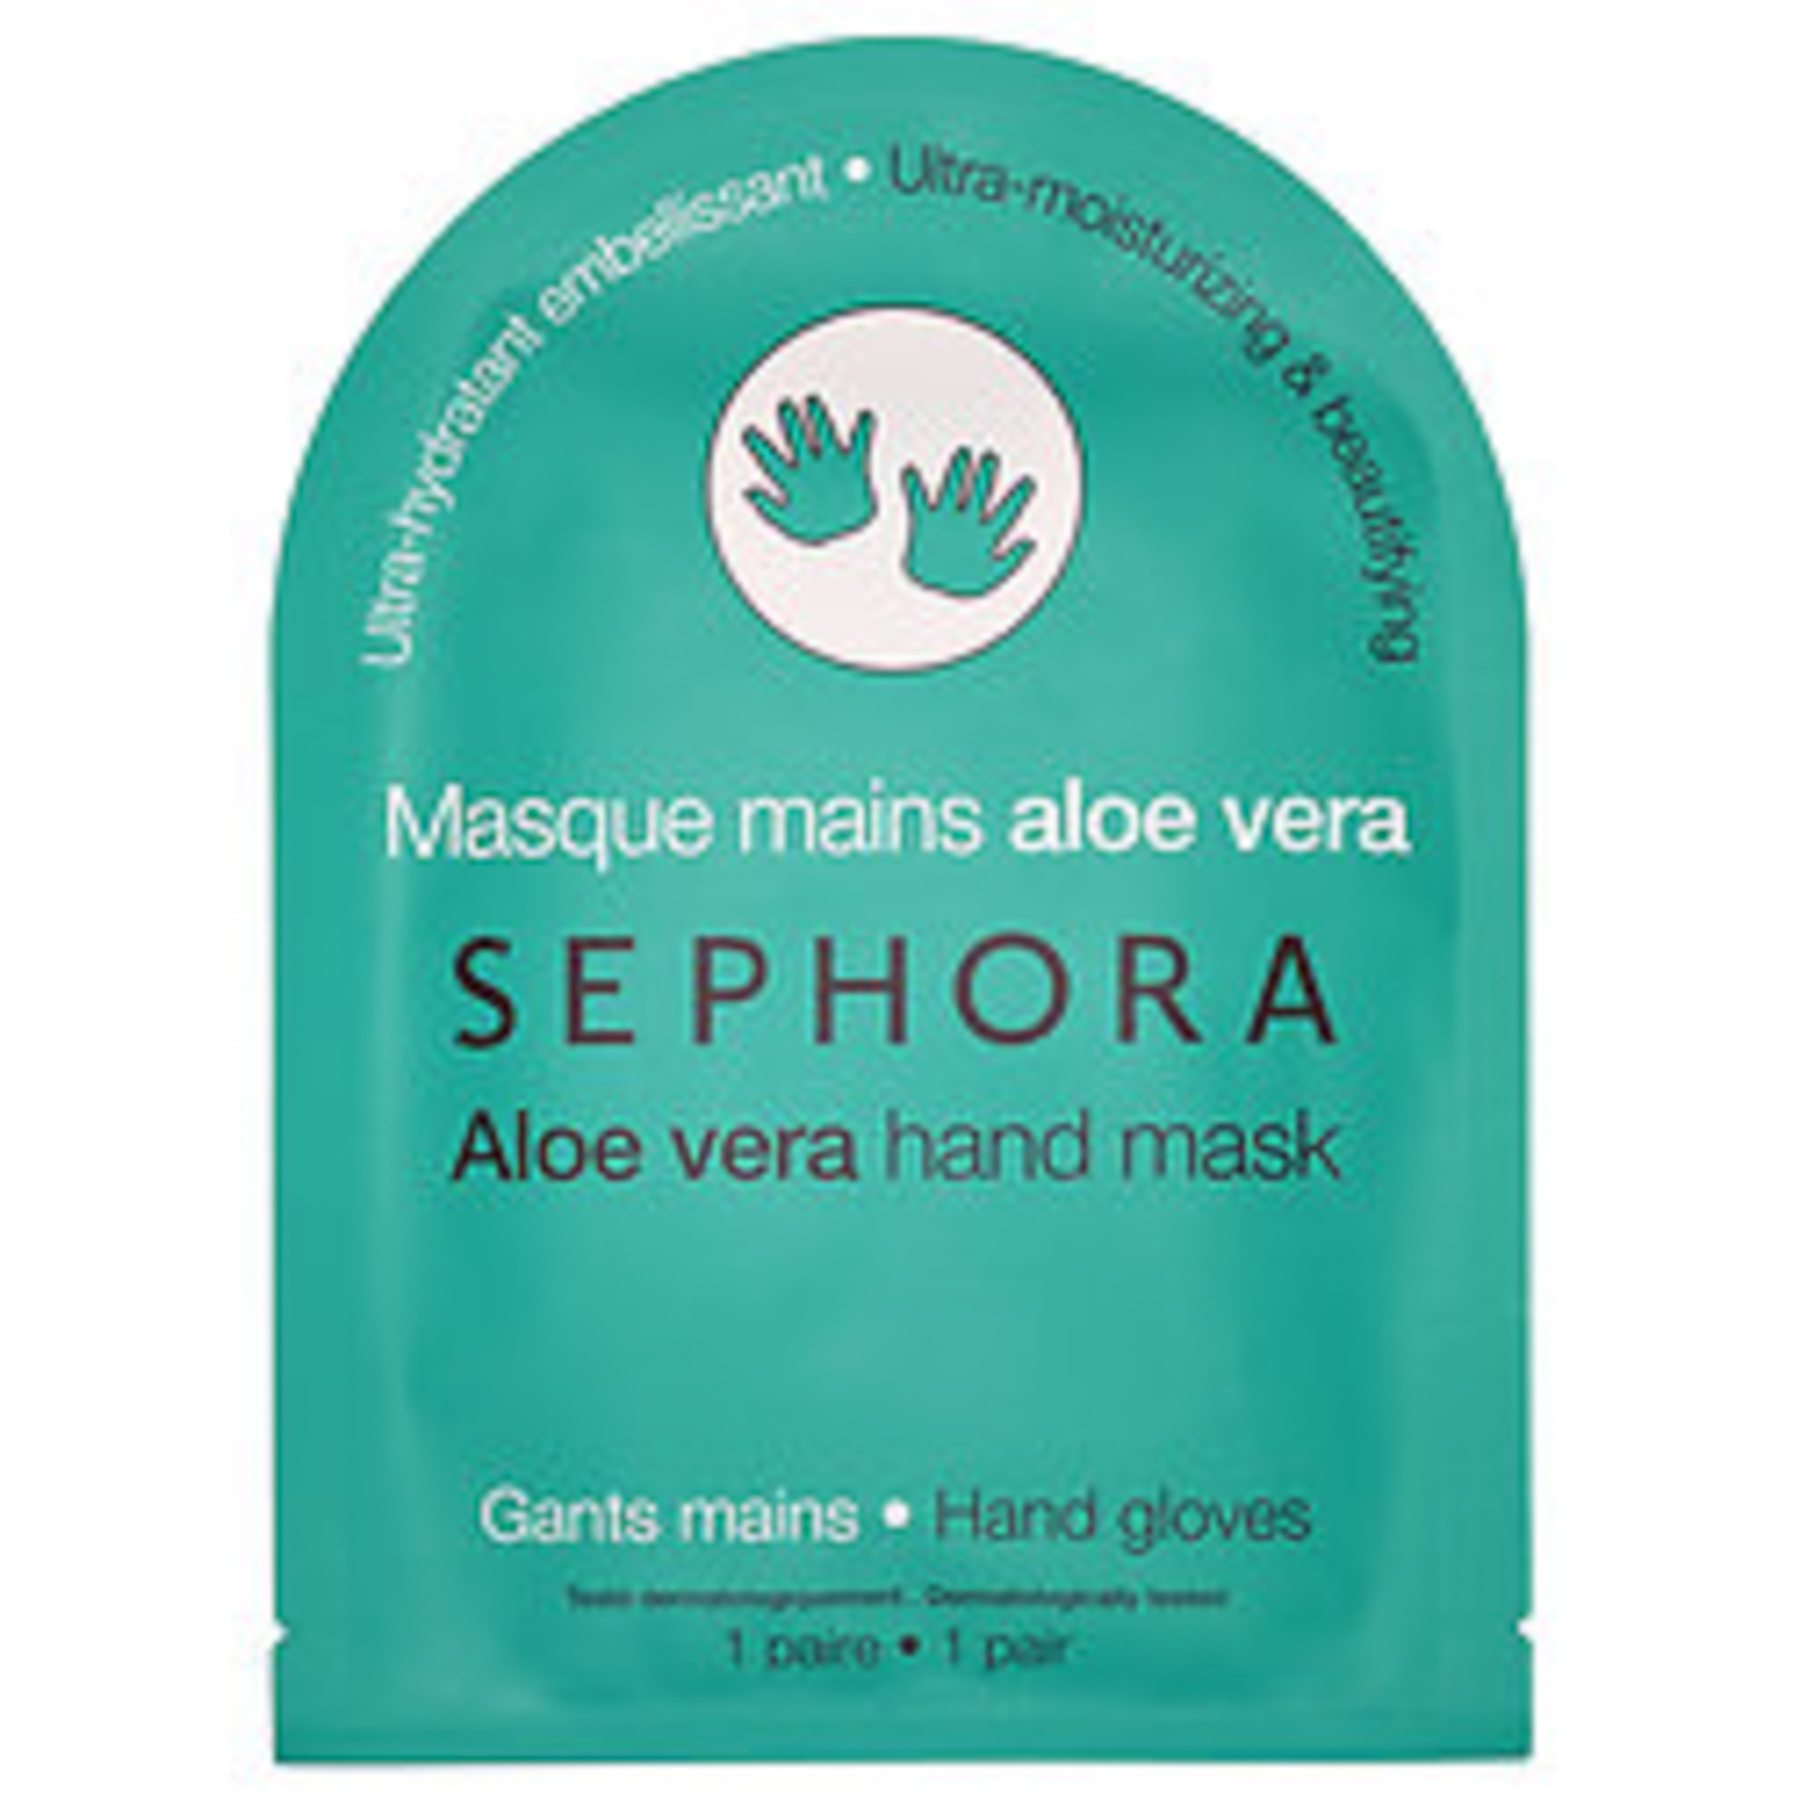 sephora hand mask.jpg